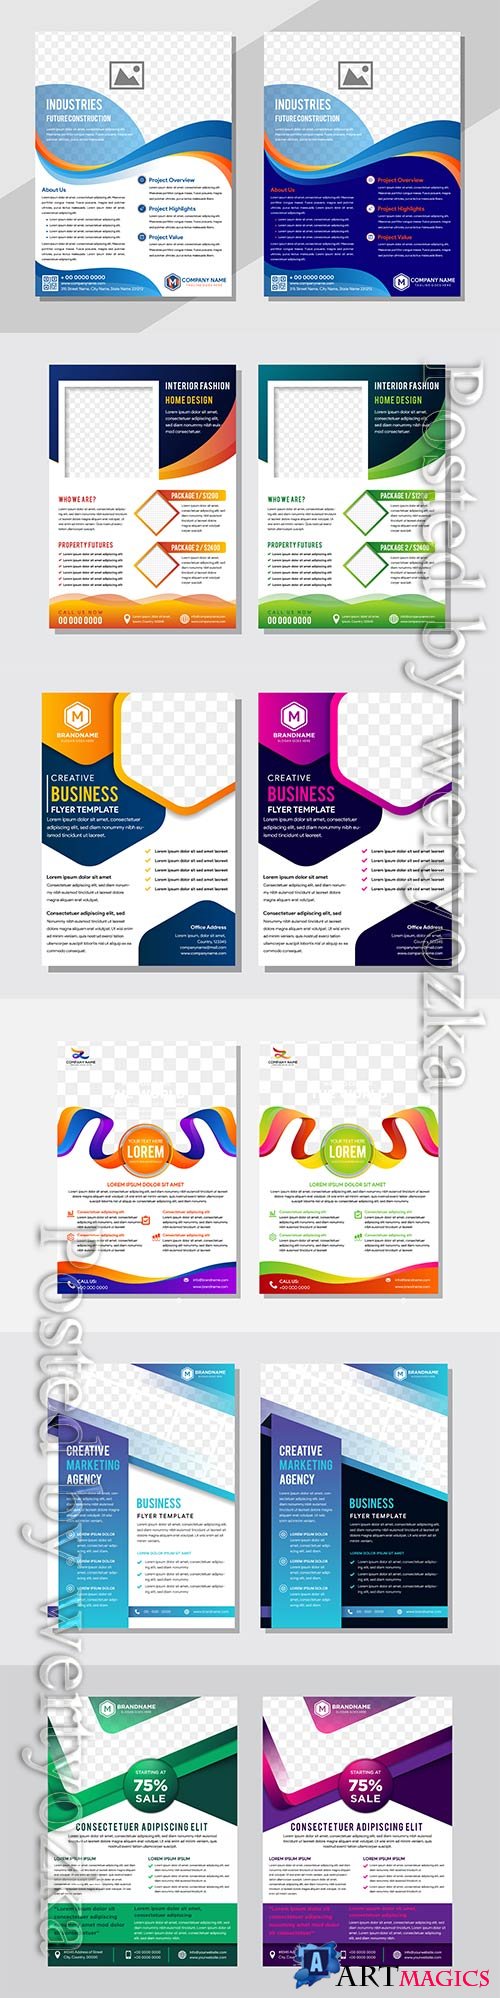 Business vector design template for brochure, flyer